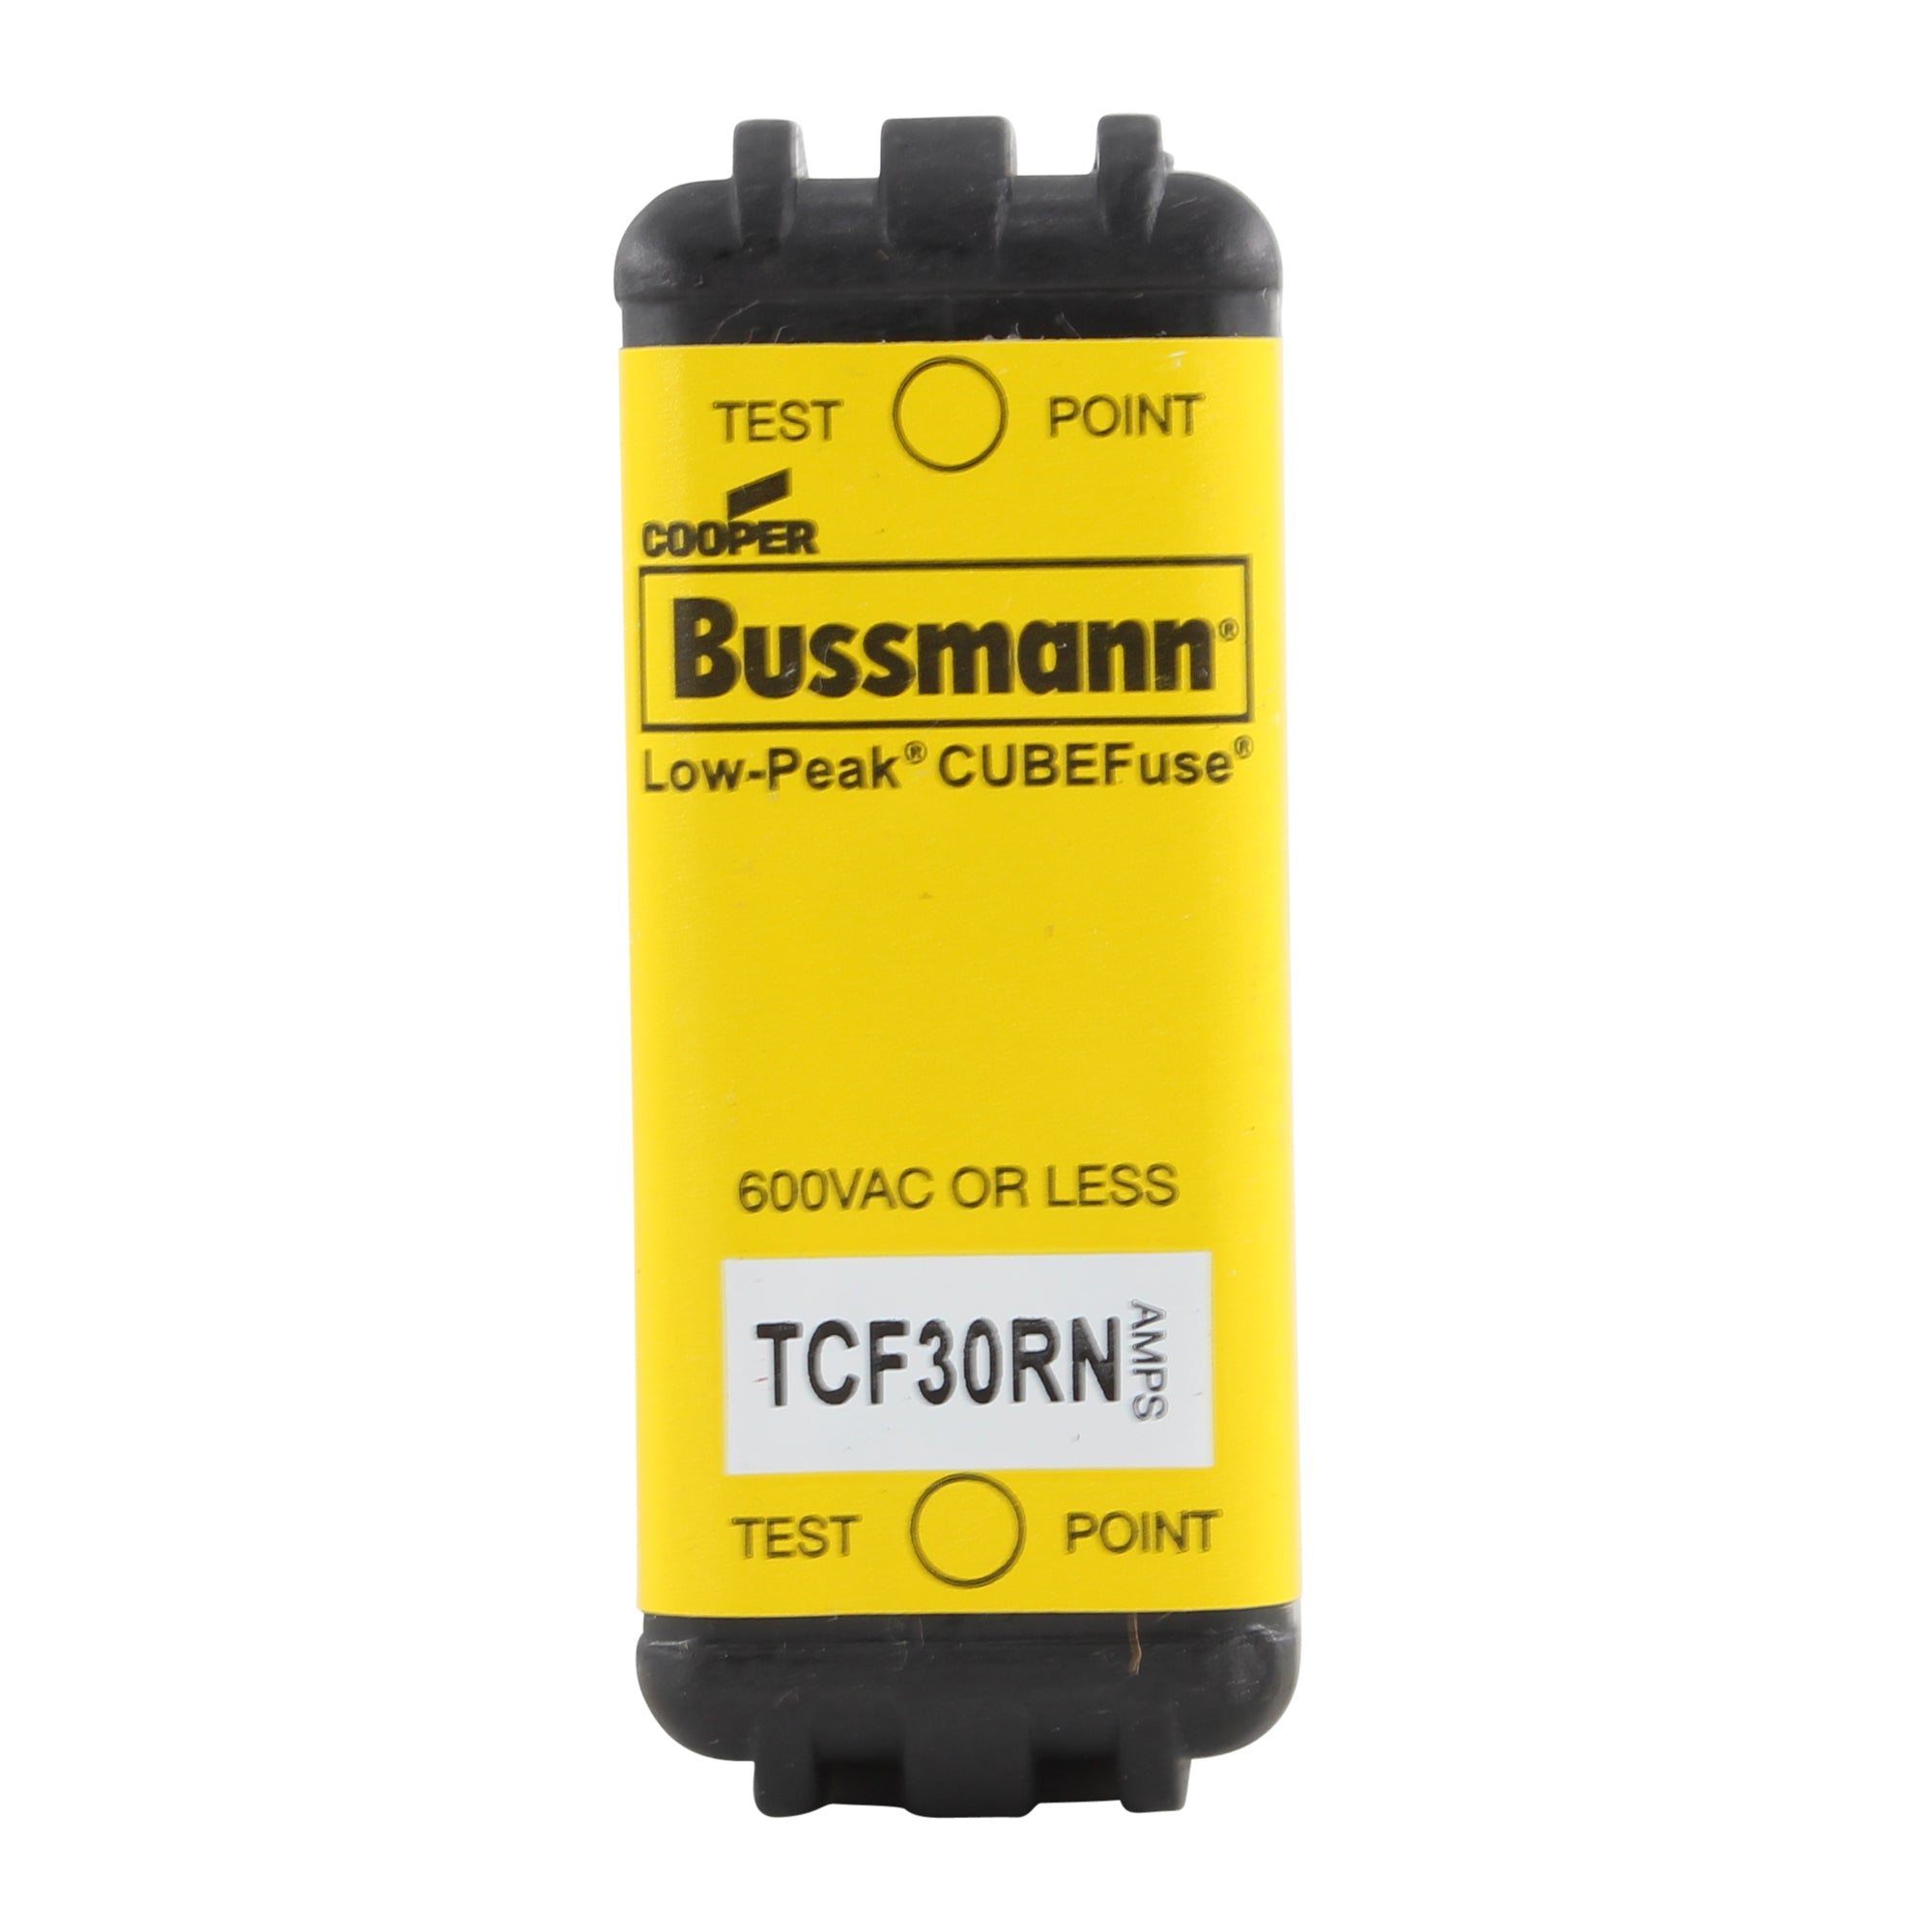 Bussmann, COOPER BUSSMANN TCF30RN LOW-PEAK CUBEFUSE, NON-INDICATION, 30A, 600V